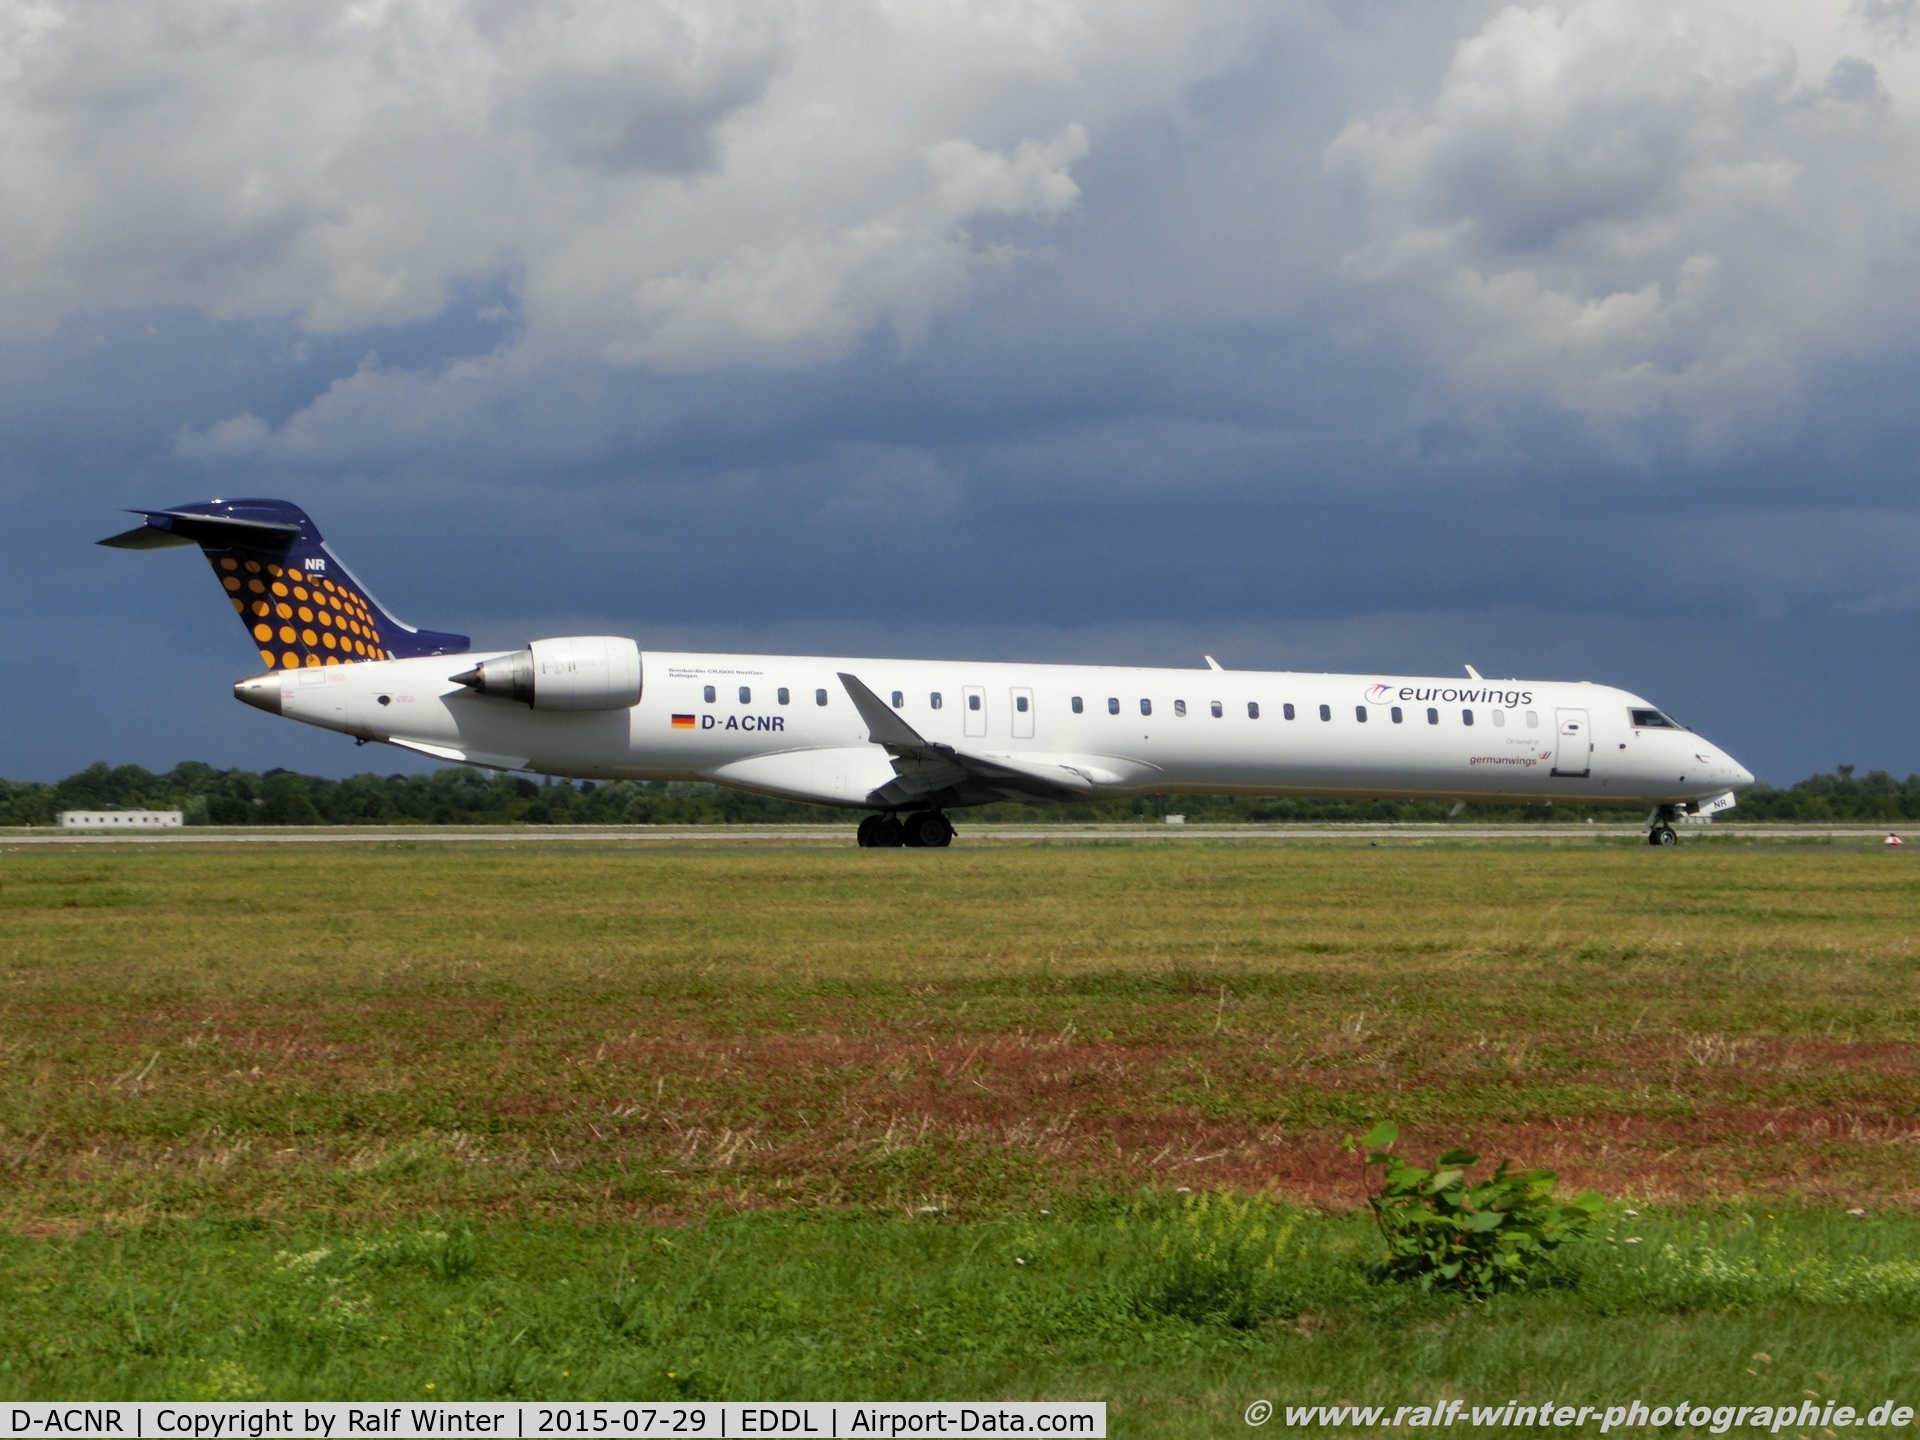 D-ACNR, 2011 Bombardier CRJ-900LR (CL-600-2D24) C/N 15263, Bombardier CL-600-2D24 CRJ-900 - EW EWG Eurowings Lufthansa Regional - 15263 - D-ACNR - 29.07.2015 - DUS